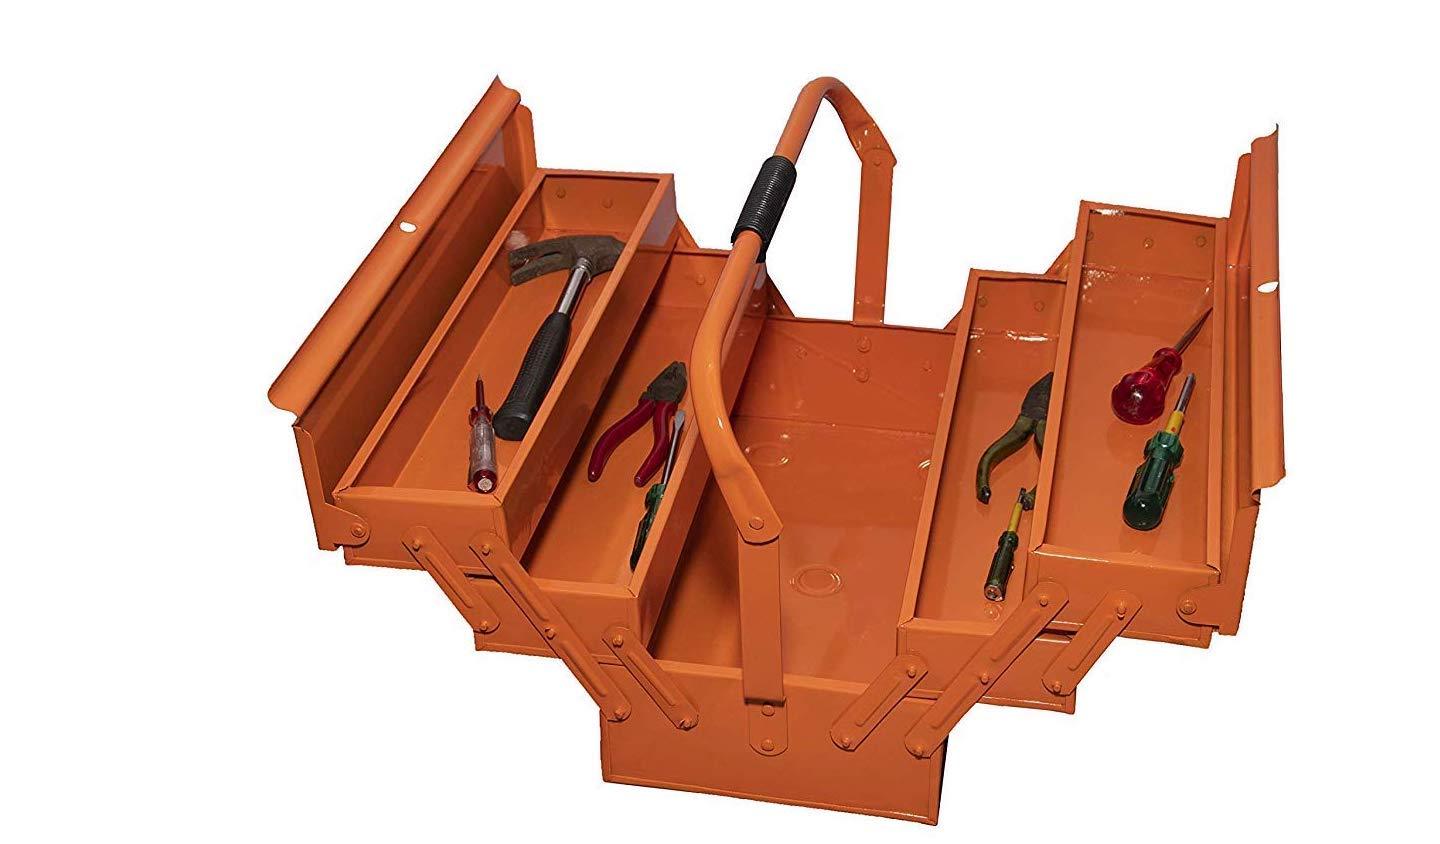 0501 Metal 5 Compartment Tool Box - SkyShopy